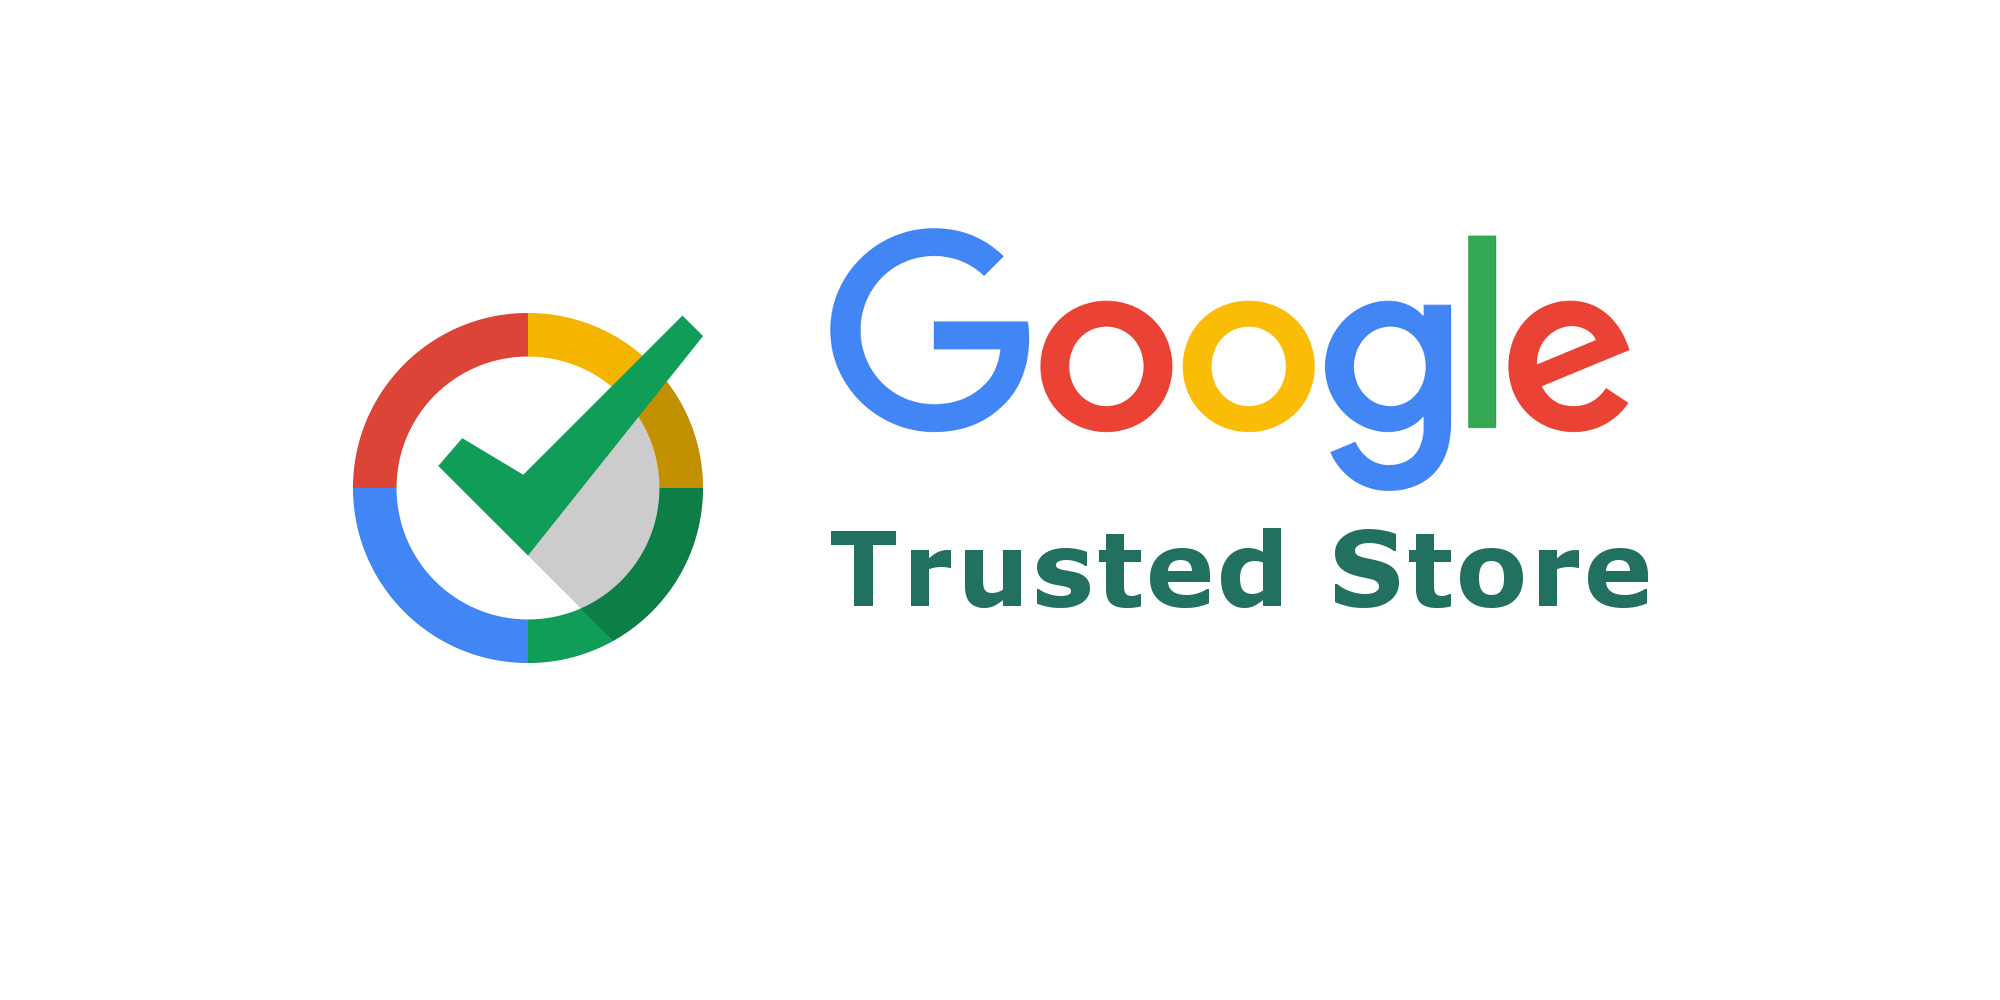 google trusted store identify service